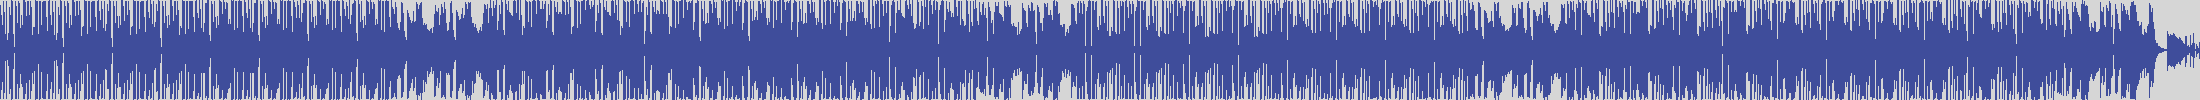 noclouds_chillout [NOC001] Alf Visser - Elapsed [Chilling Mix] audio wave form